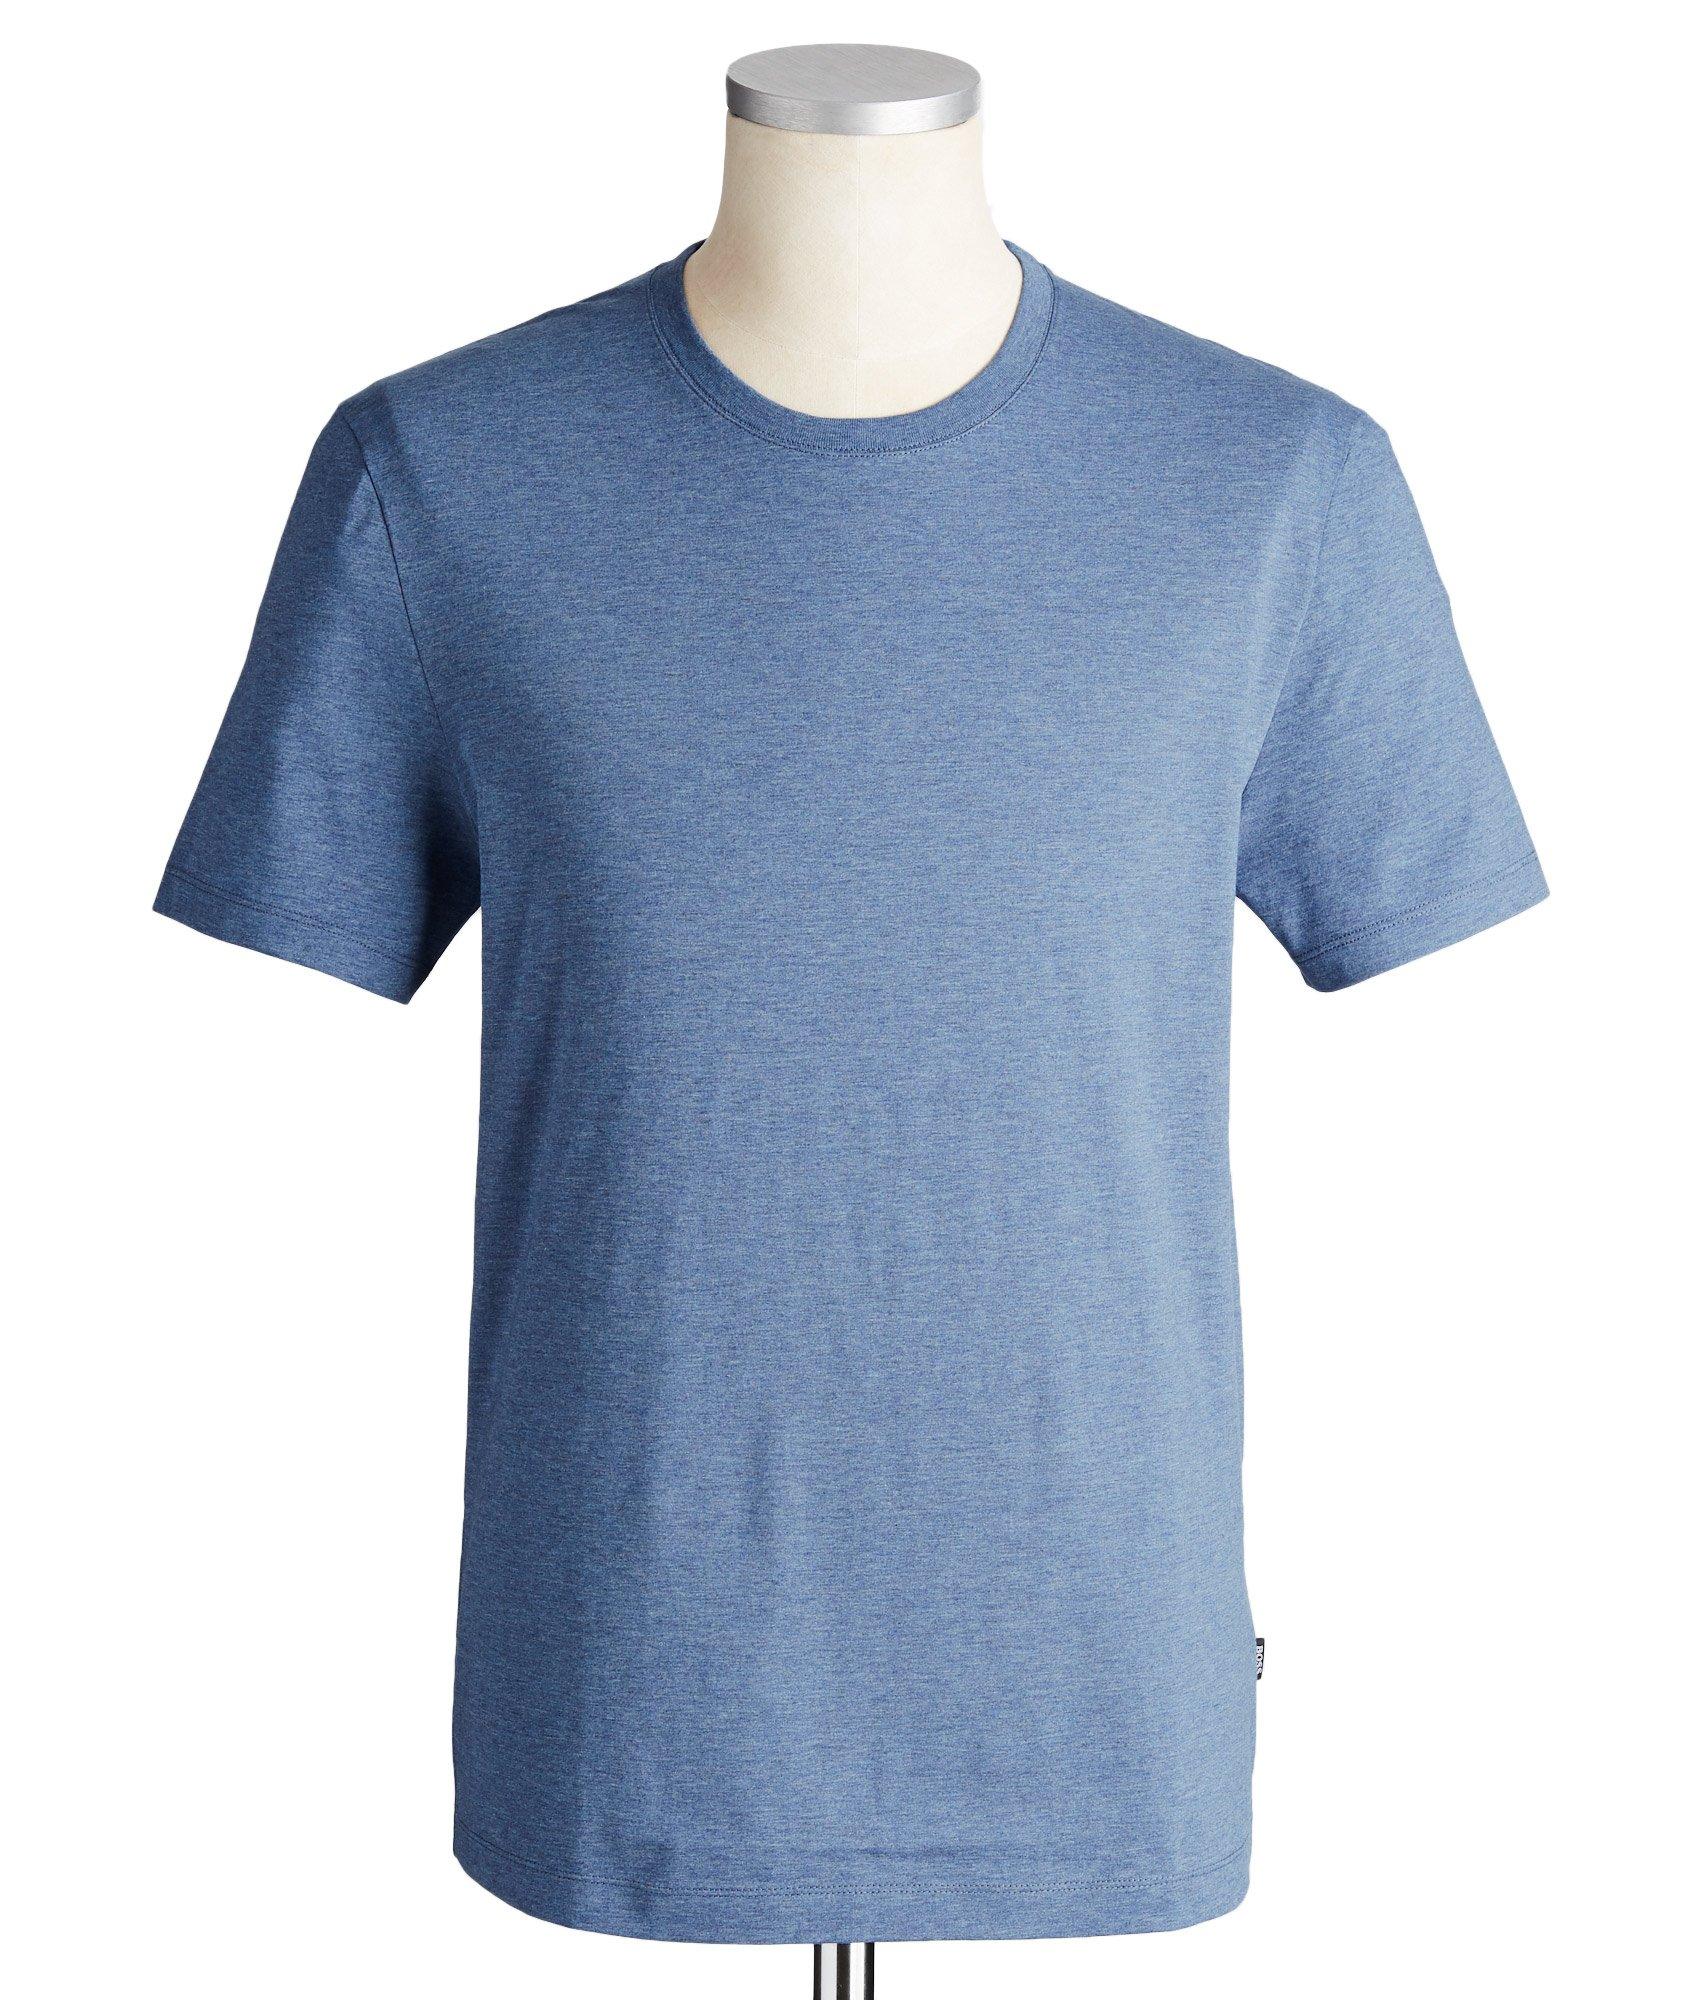 Tiburt Cotton T-Shirt image 0